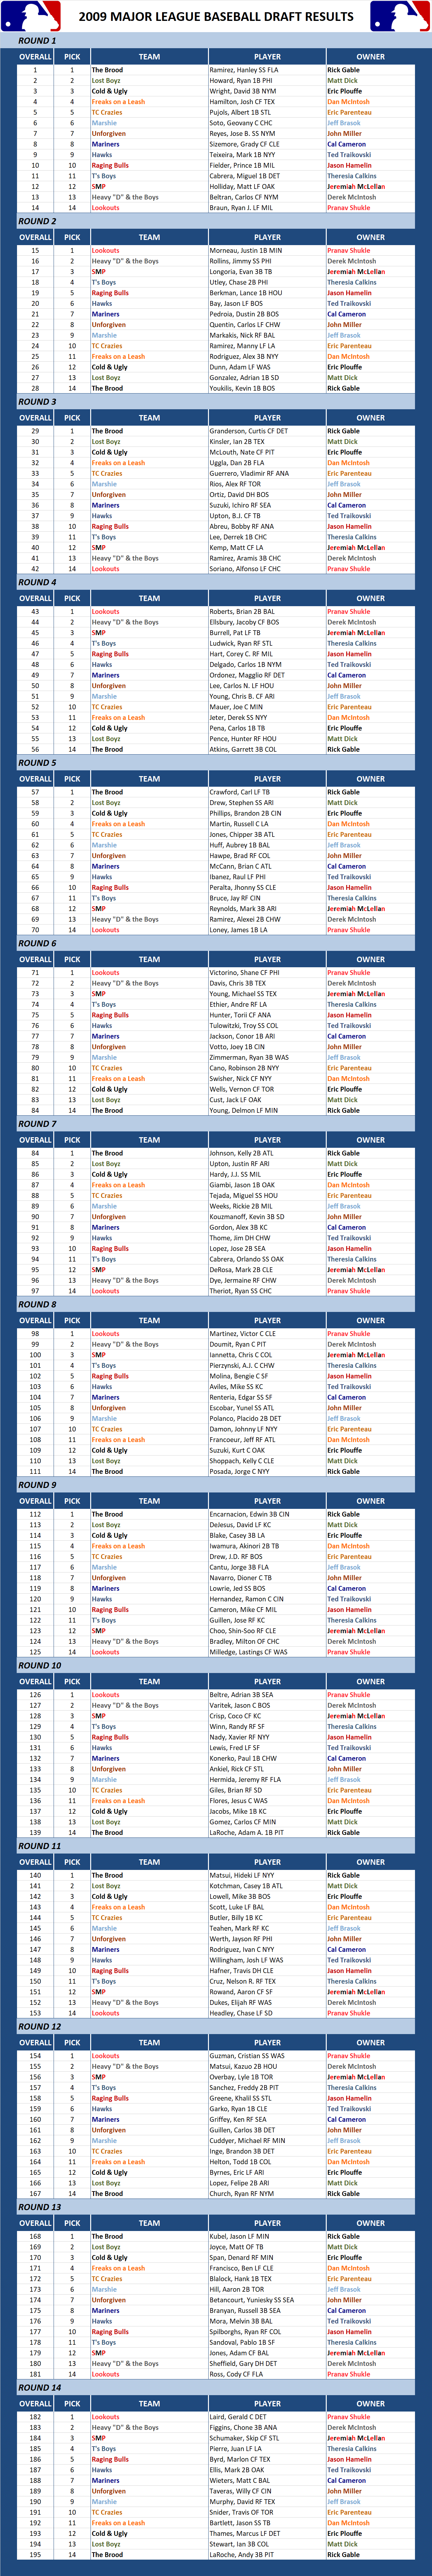 2009 Major league Baseball Draft Results